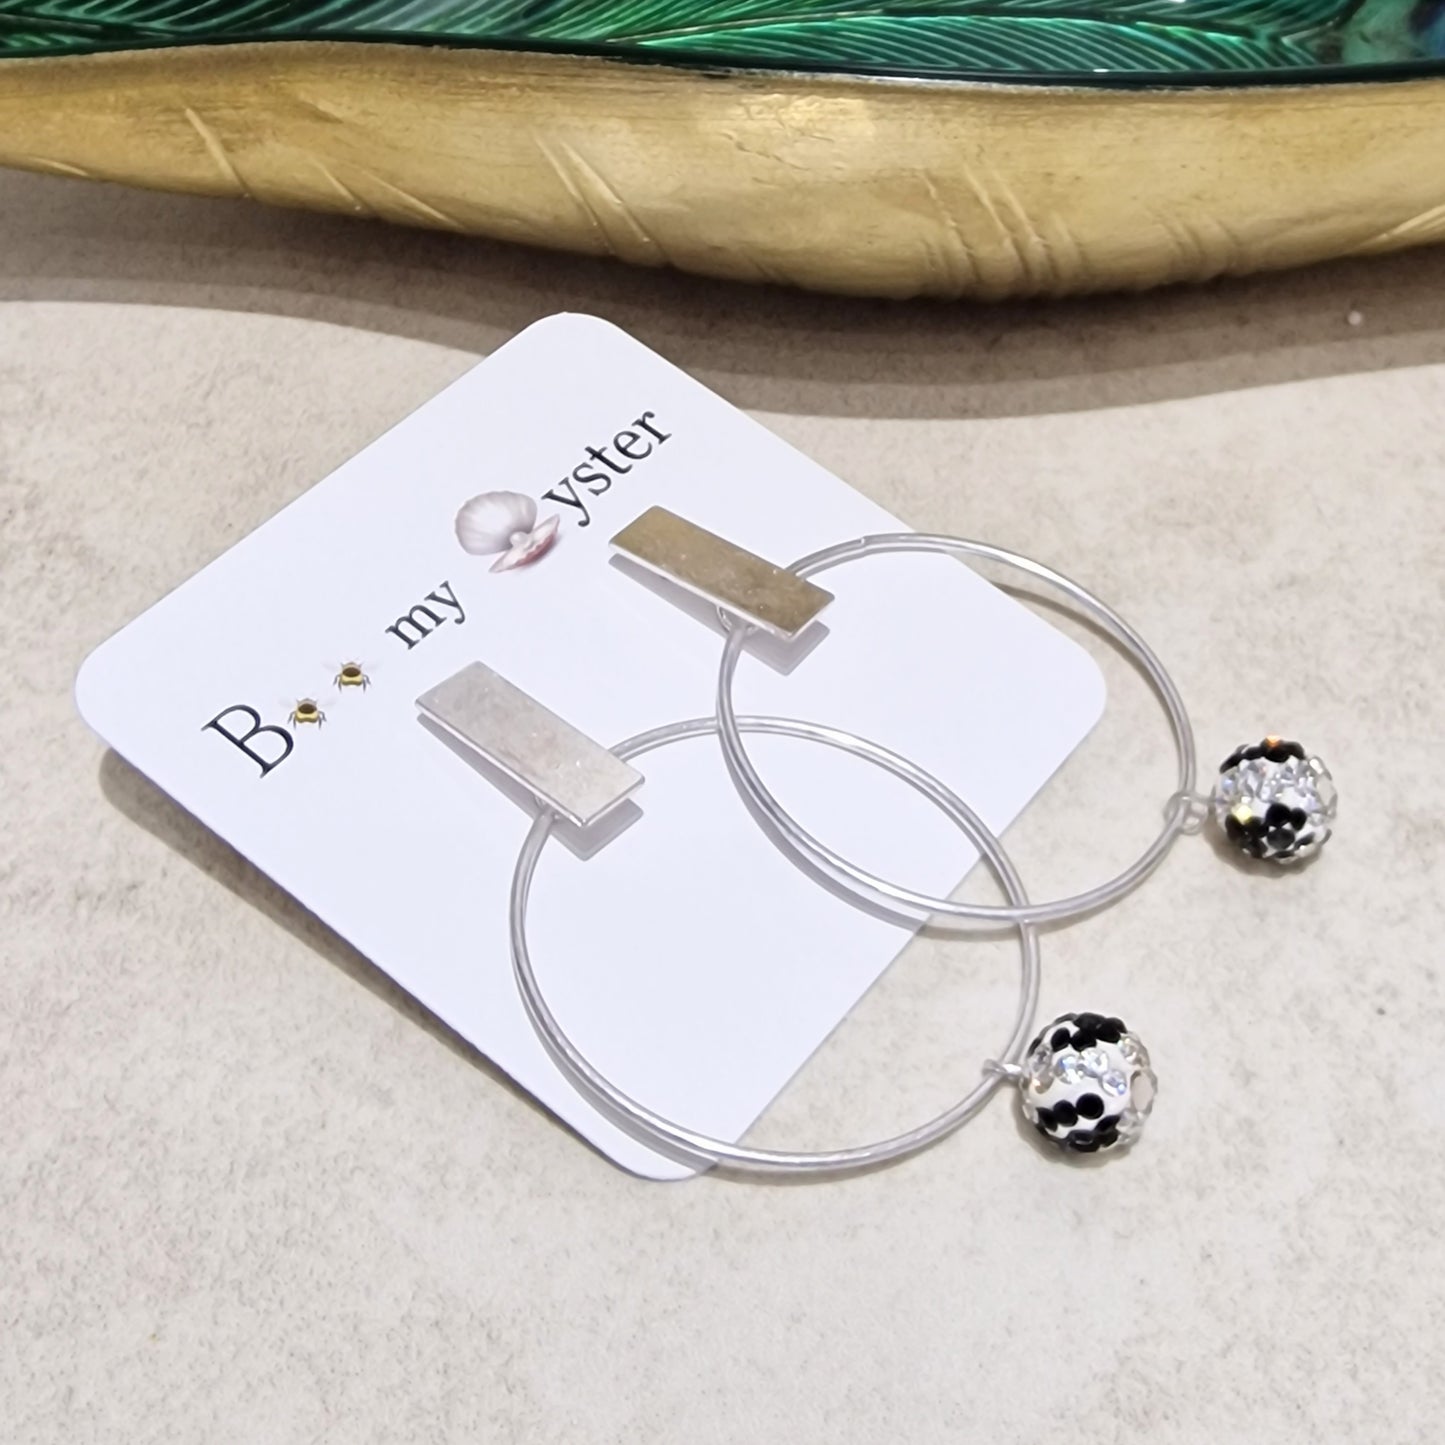 Black & White Crystal Ball Pierced Hoop Silver Fashion Earrings